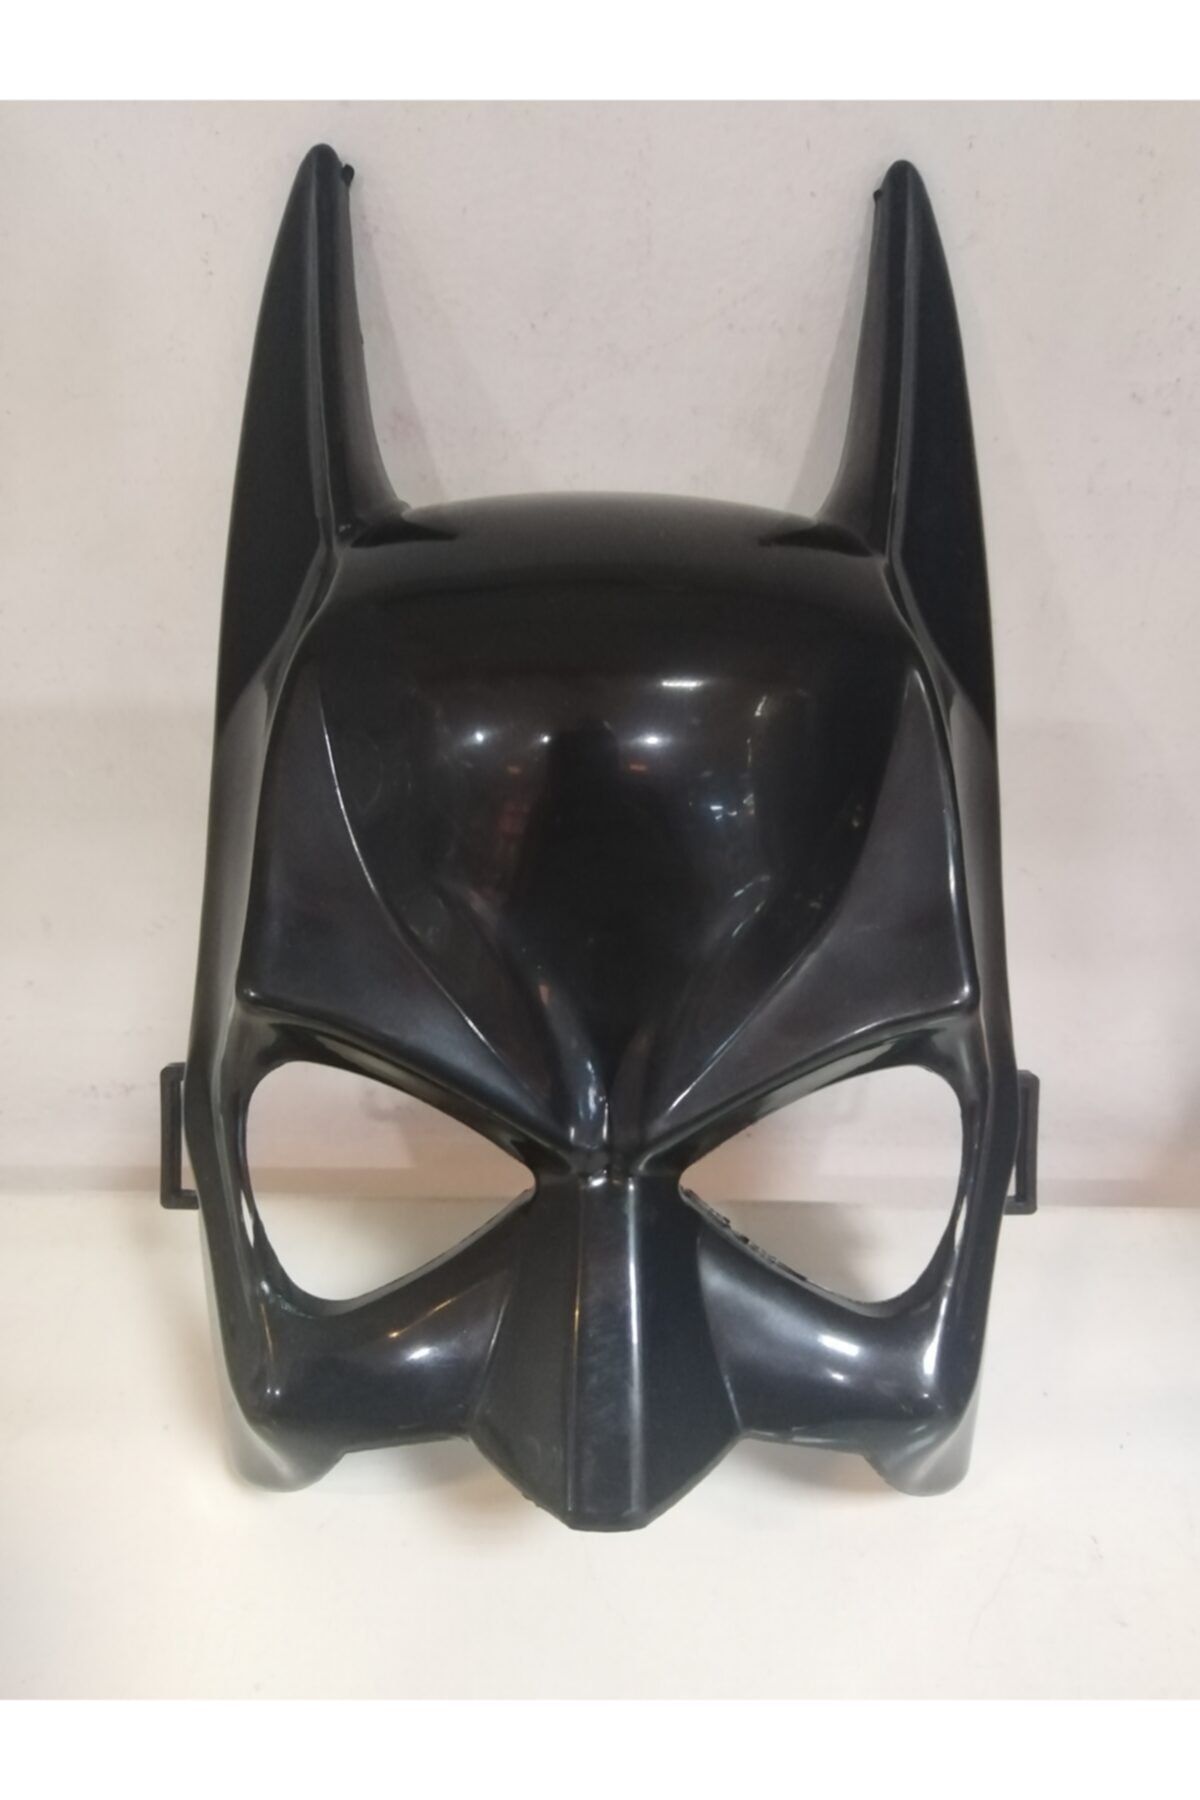 Fatih Oyuncak Batman Maske